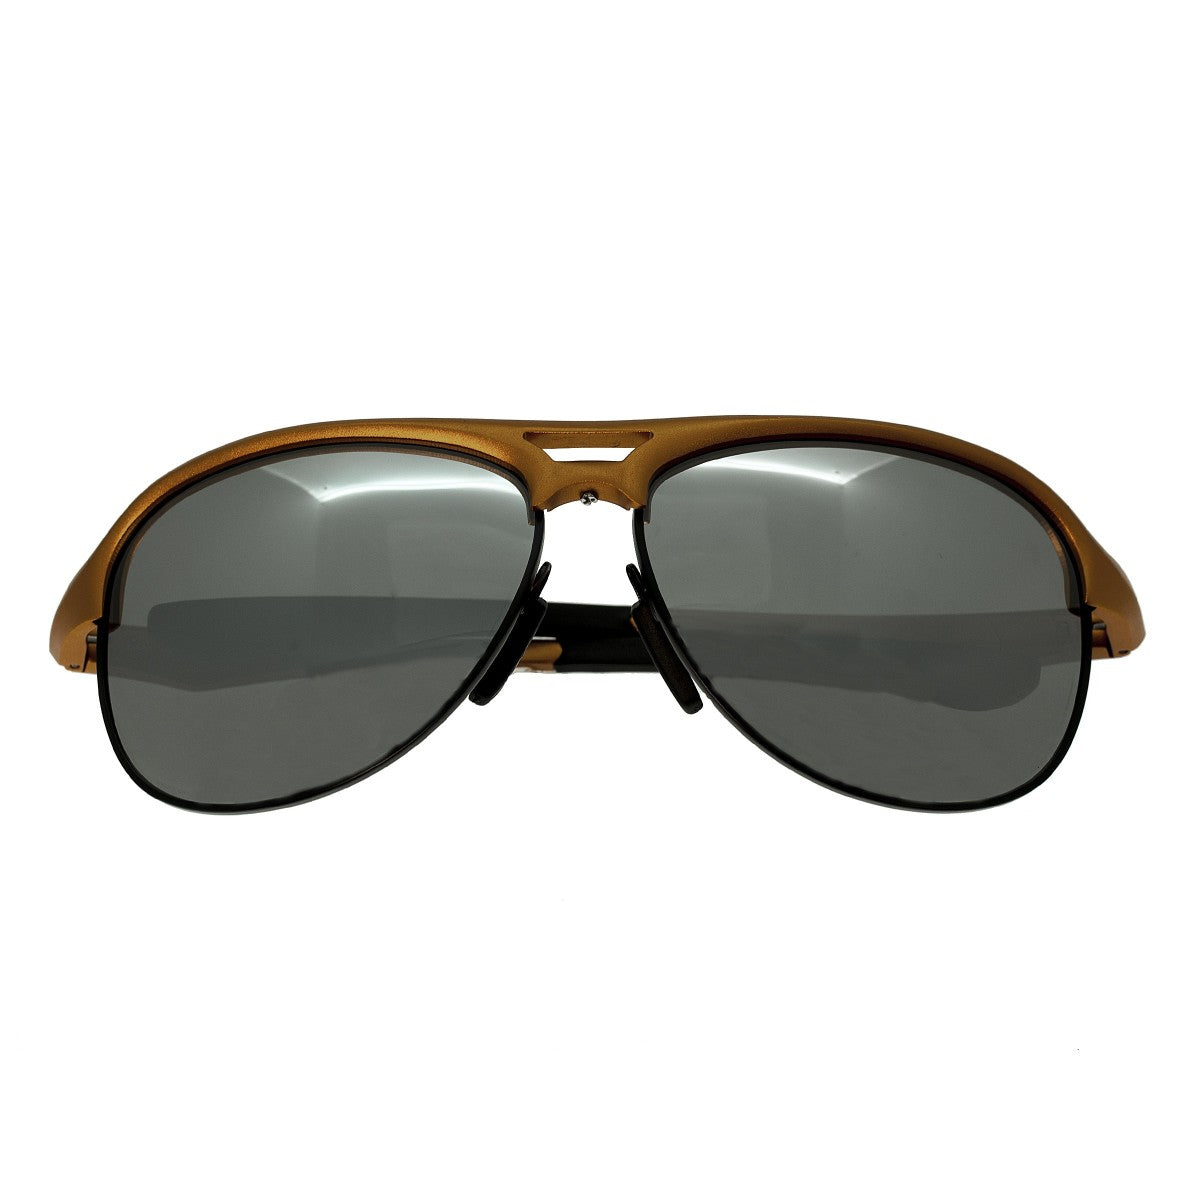 Breed Jupiter Aluminium Polarized Sunglasses - Orange/Silver - BSG019OG